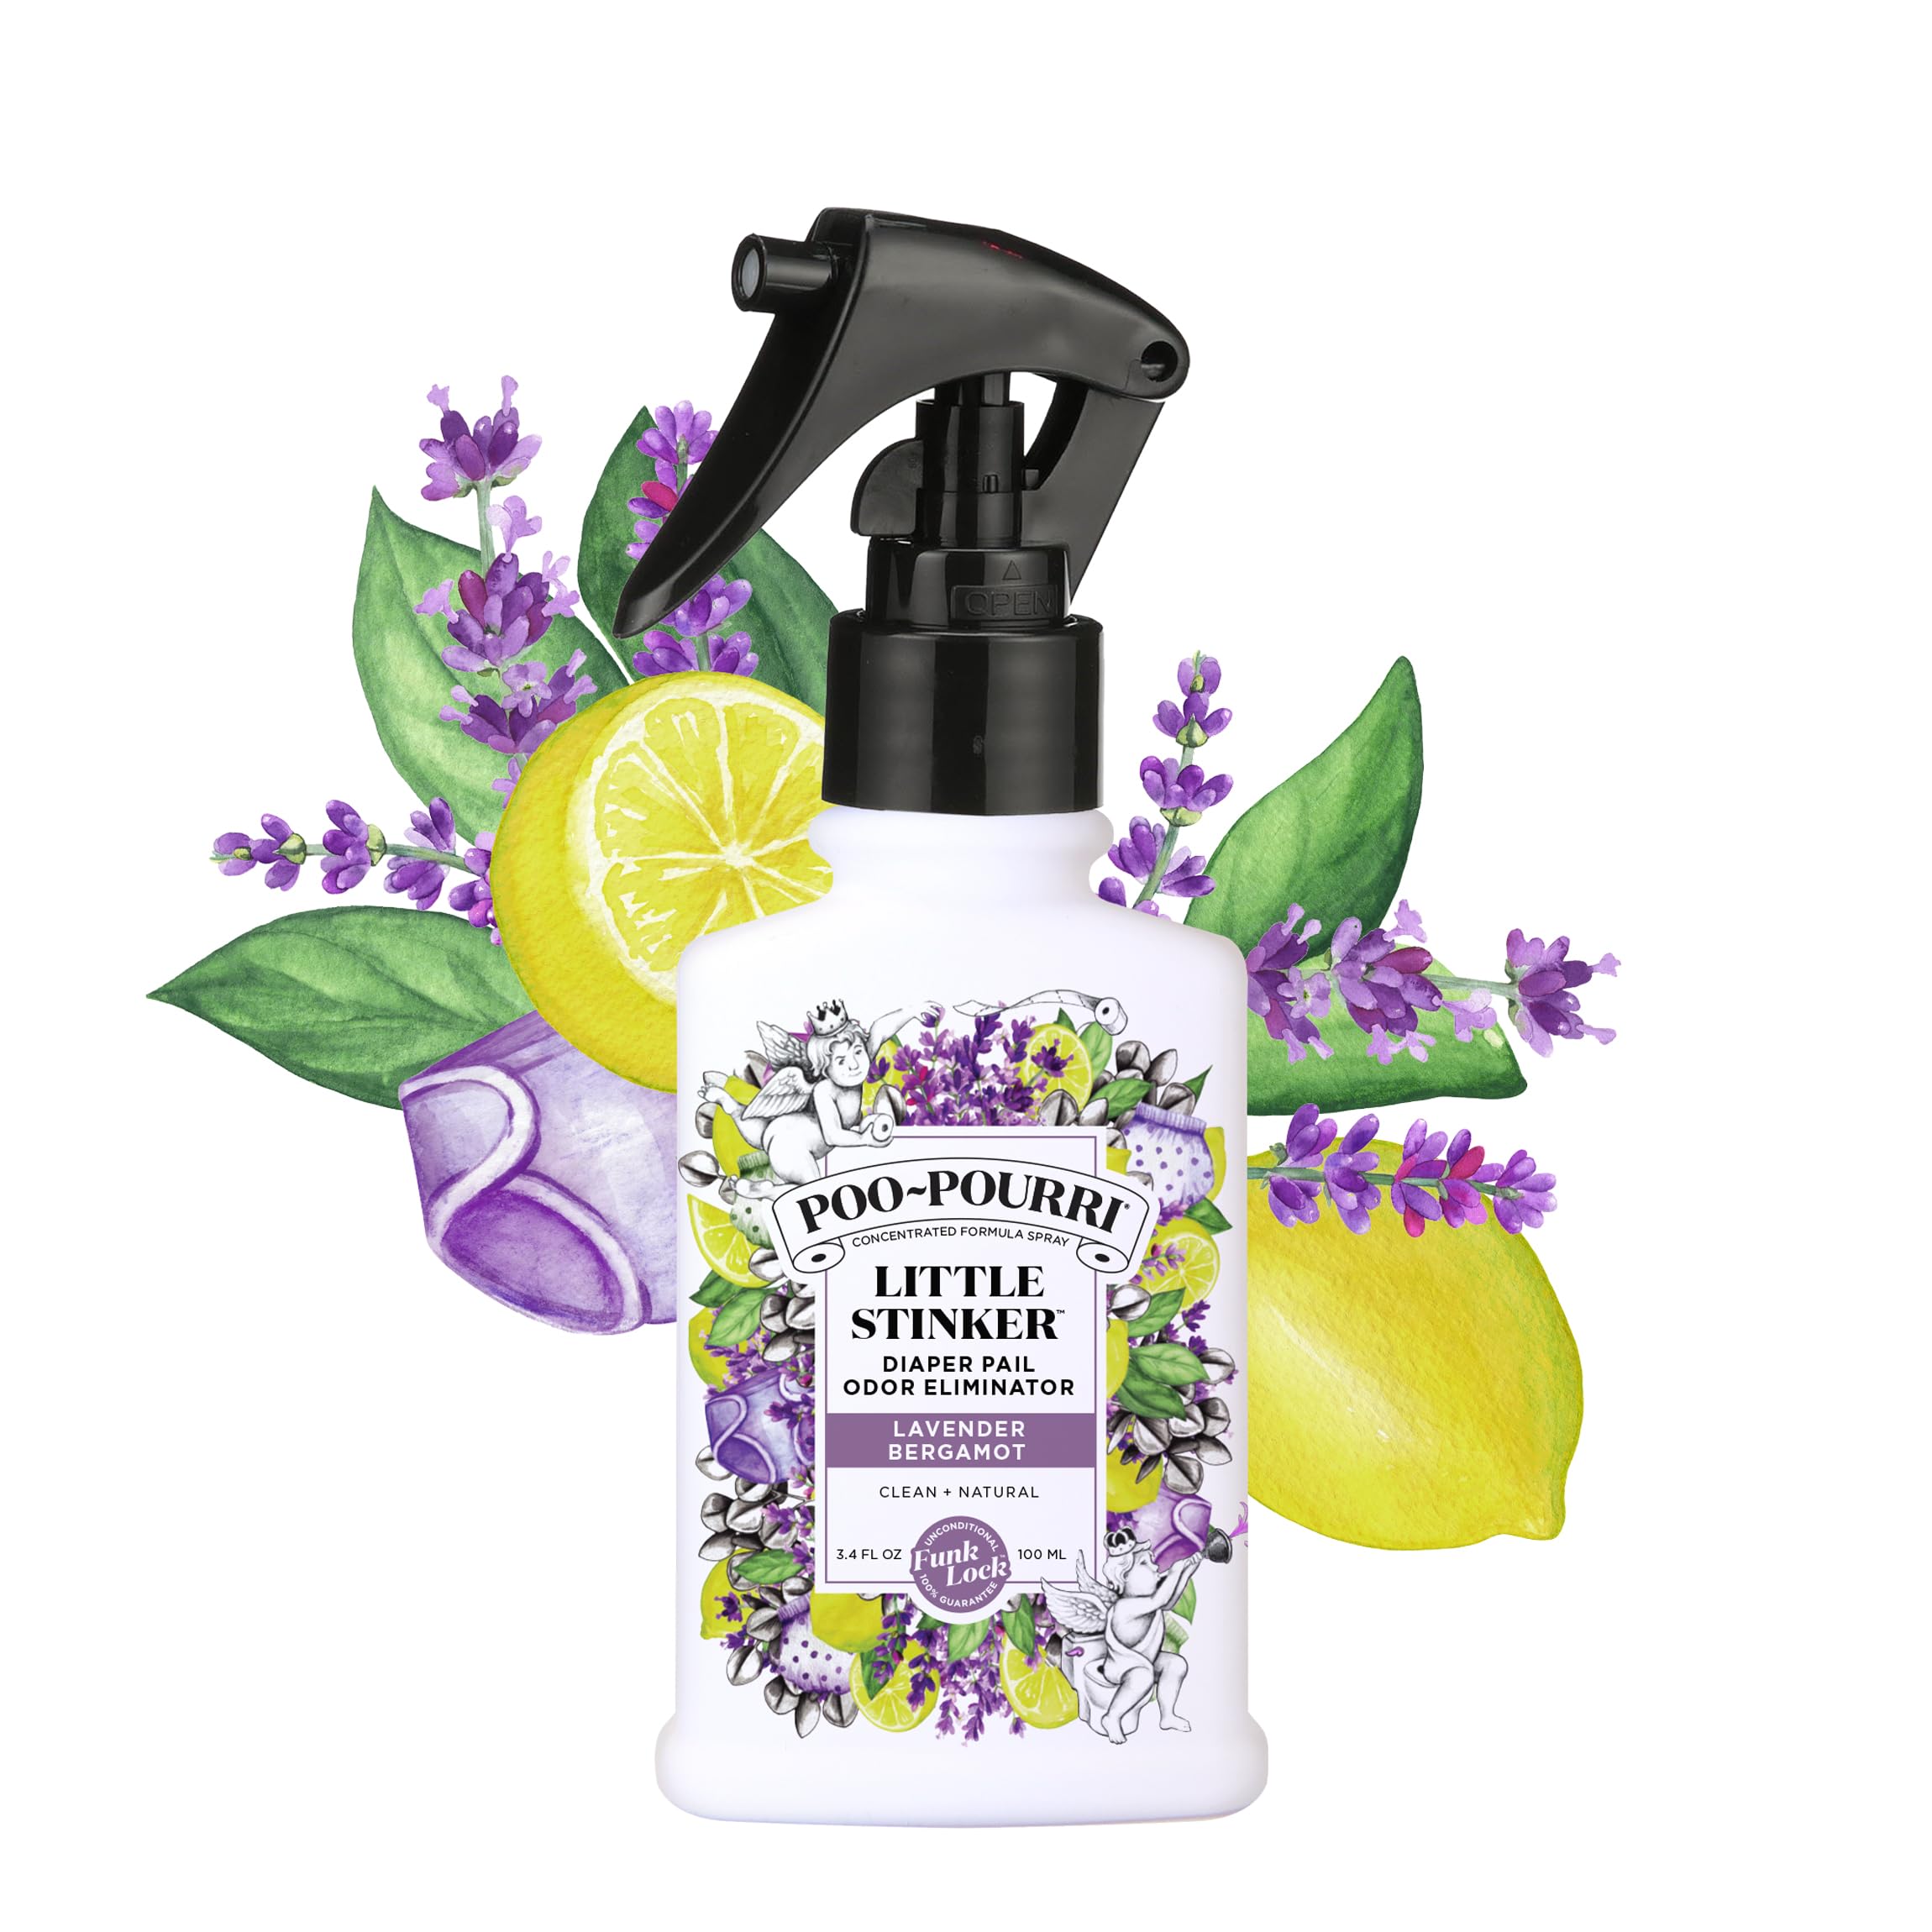 Baby-Pourri Little Stinker Diaper Pail Odor Eliminator, 3.4 Fl Oz - Lavender, Bergamot, Eucalyptus and Vanilla